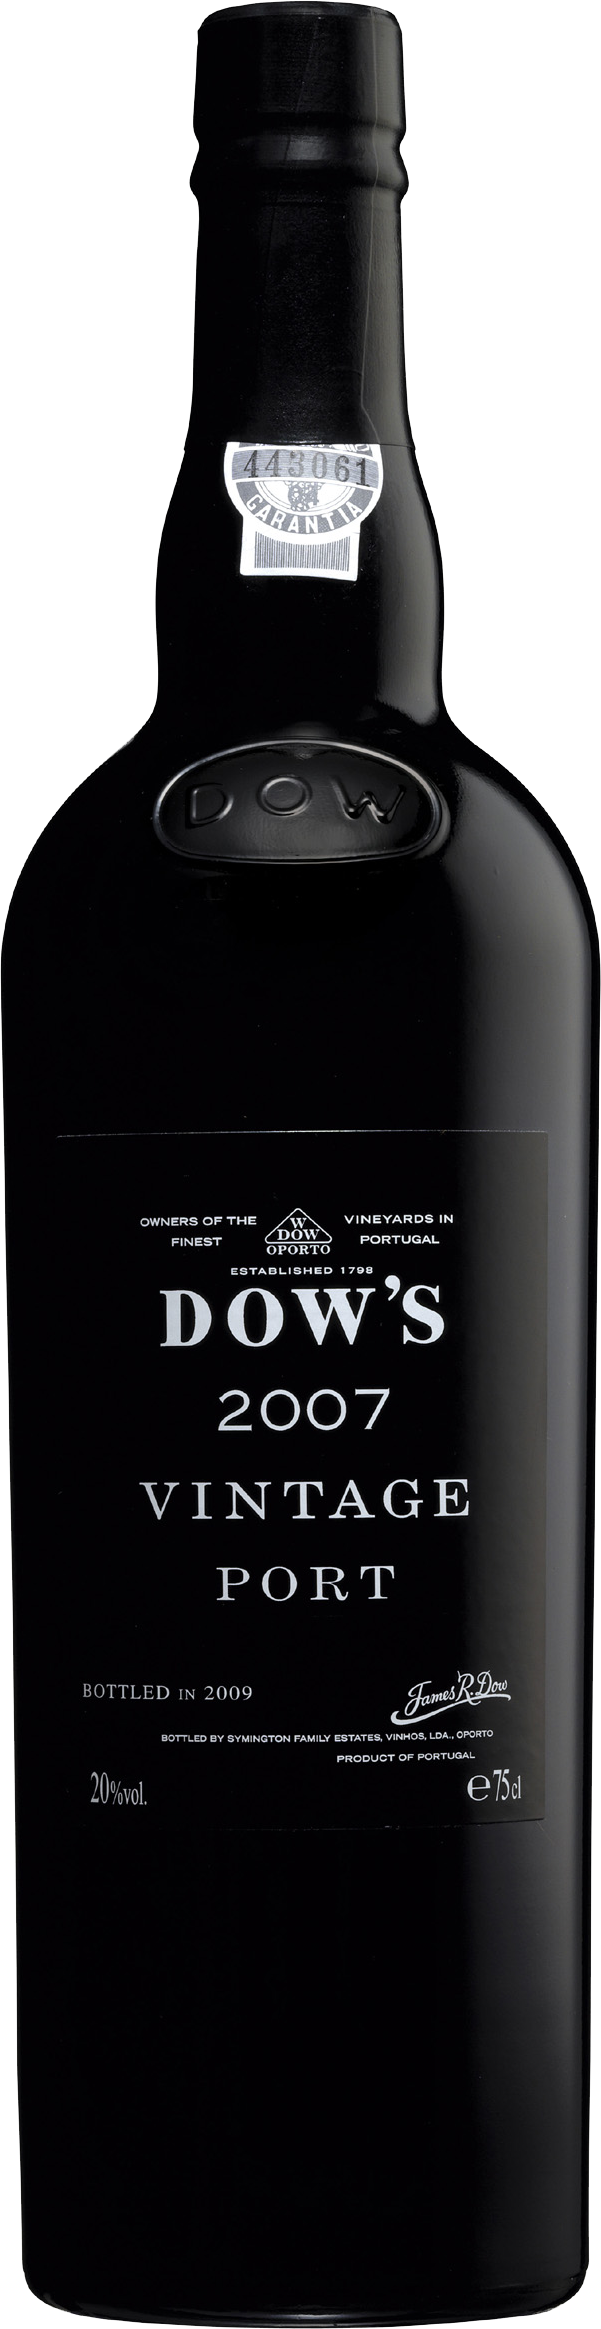 Product Image for DOW'S VINTAGE PORT 2007 - MAGNUM (1.5L)